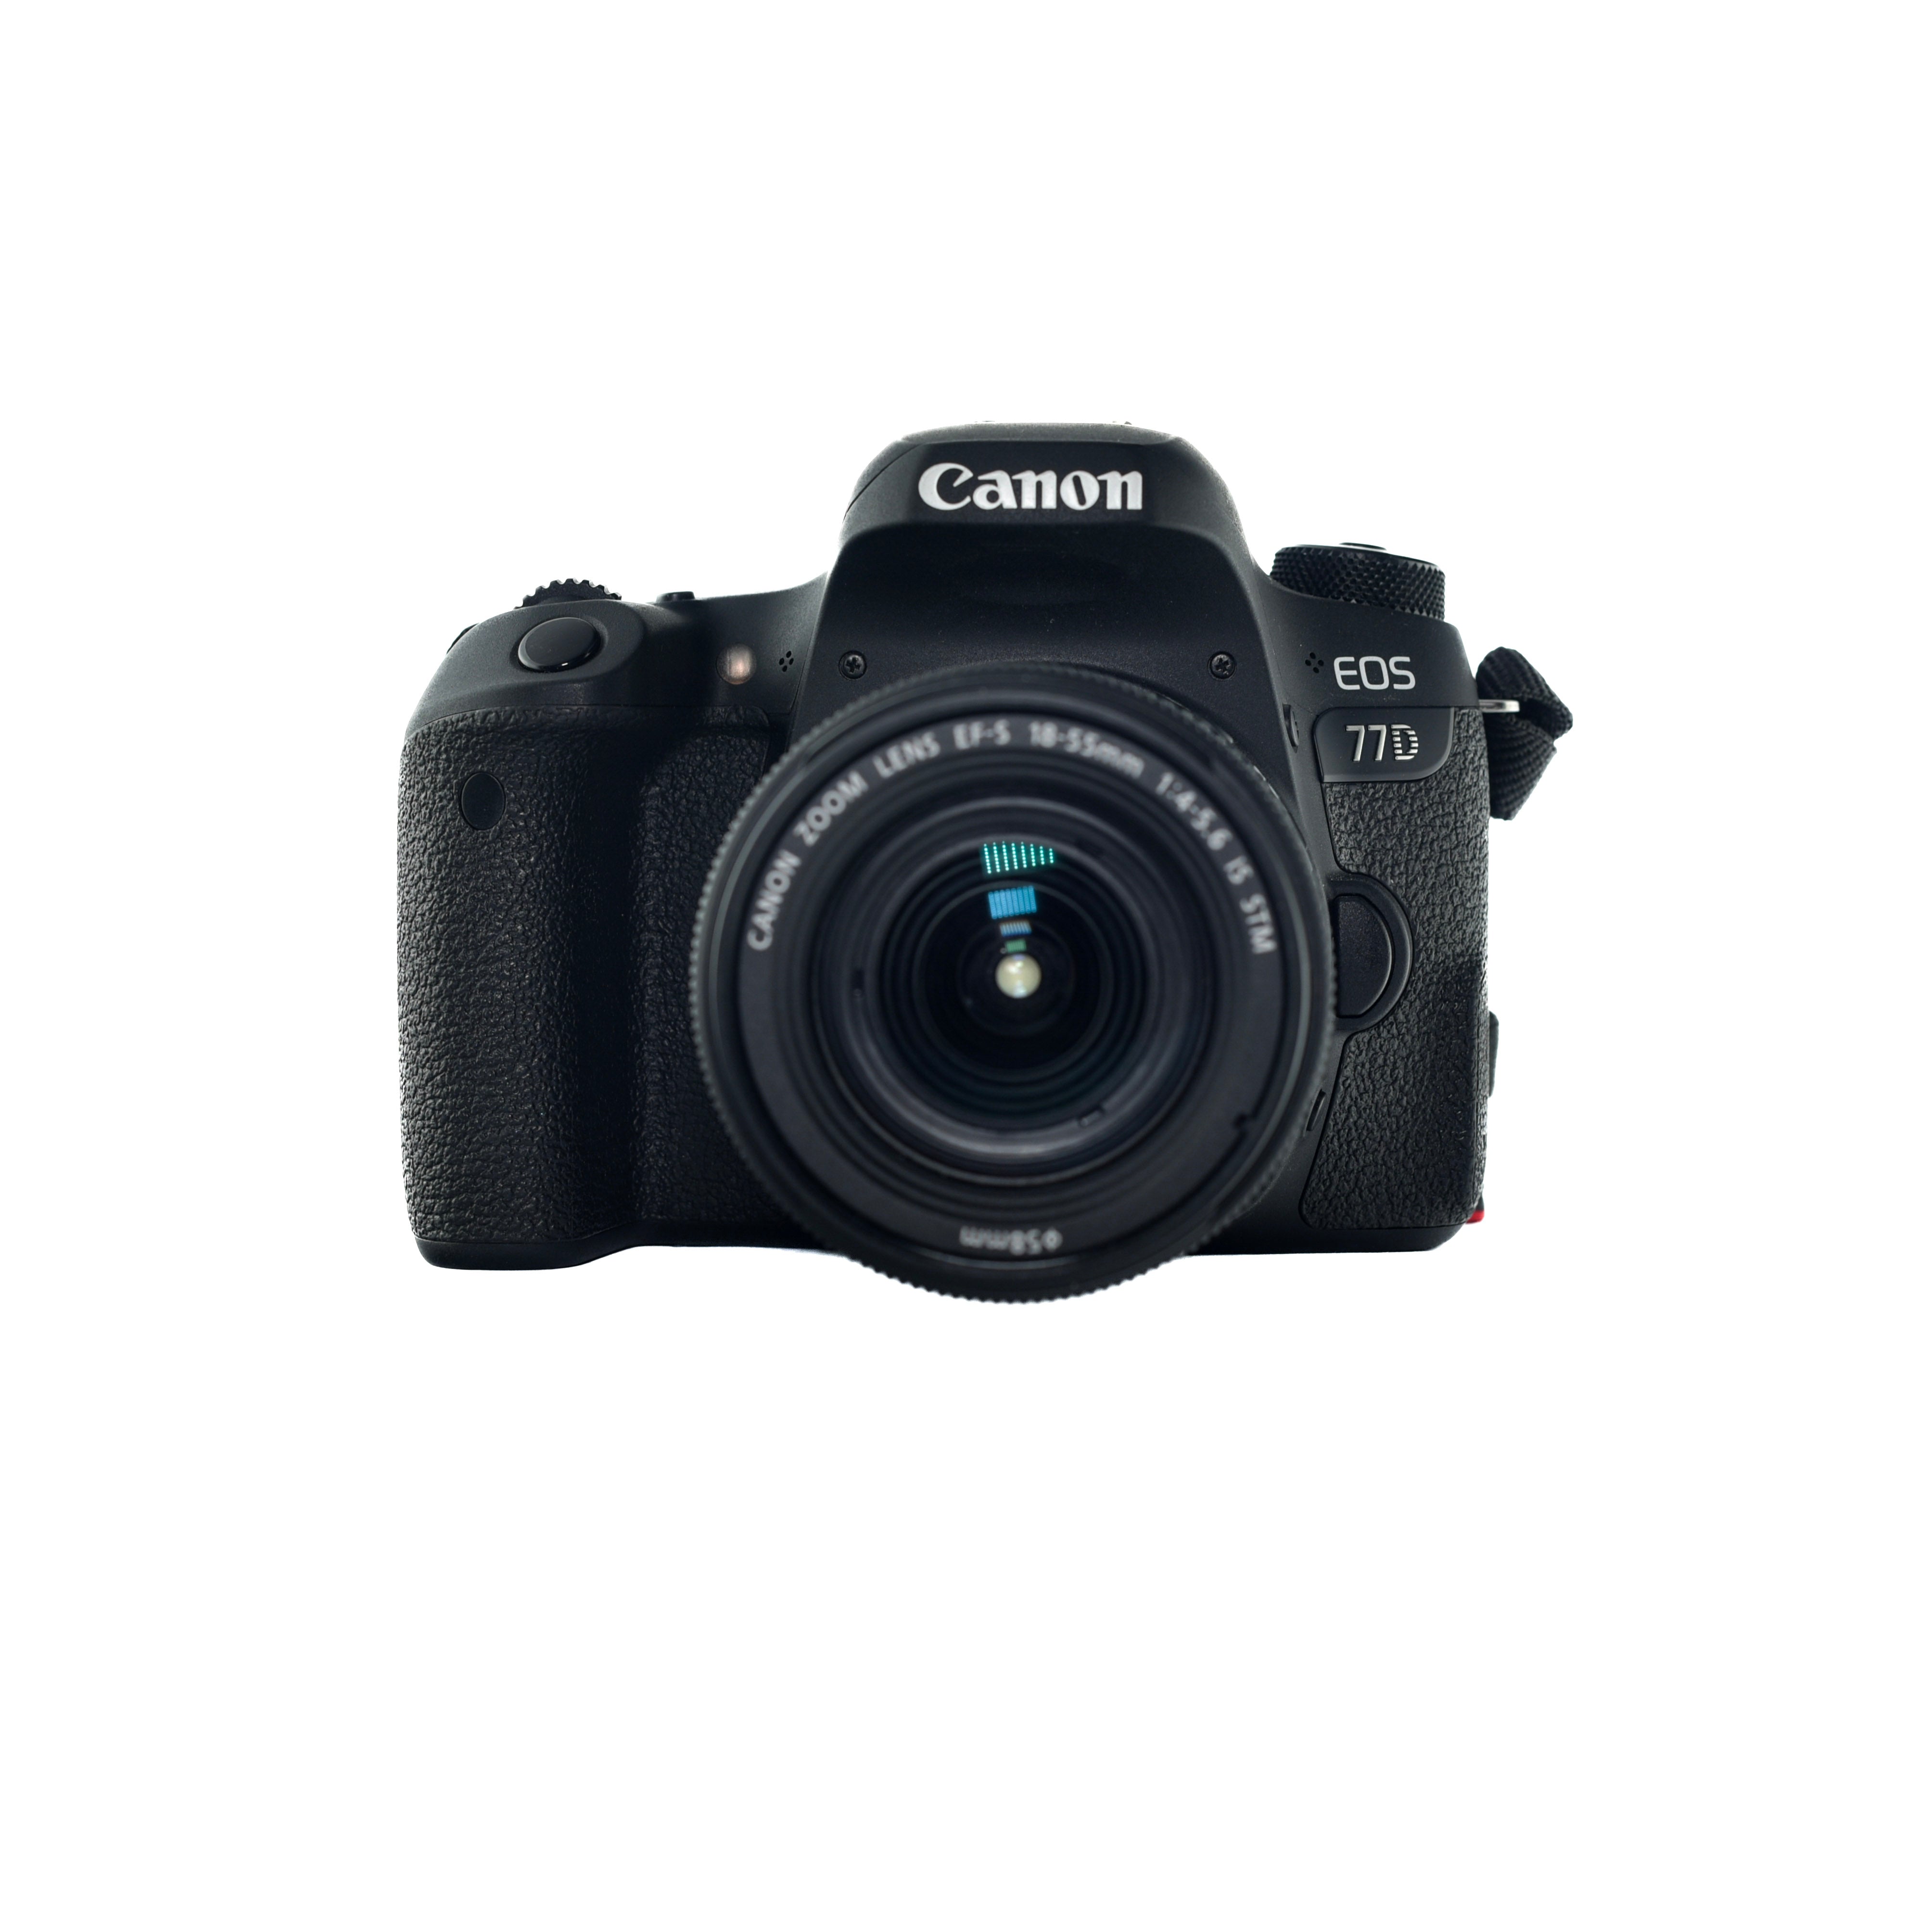 Pre-Owned Canon EOS 77D Dslr Camera & EF 18-55mm IS STM lens